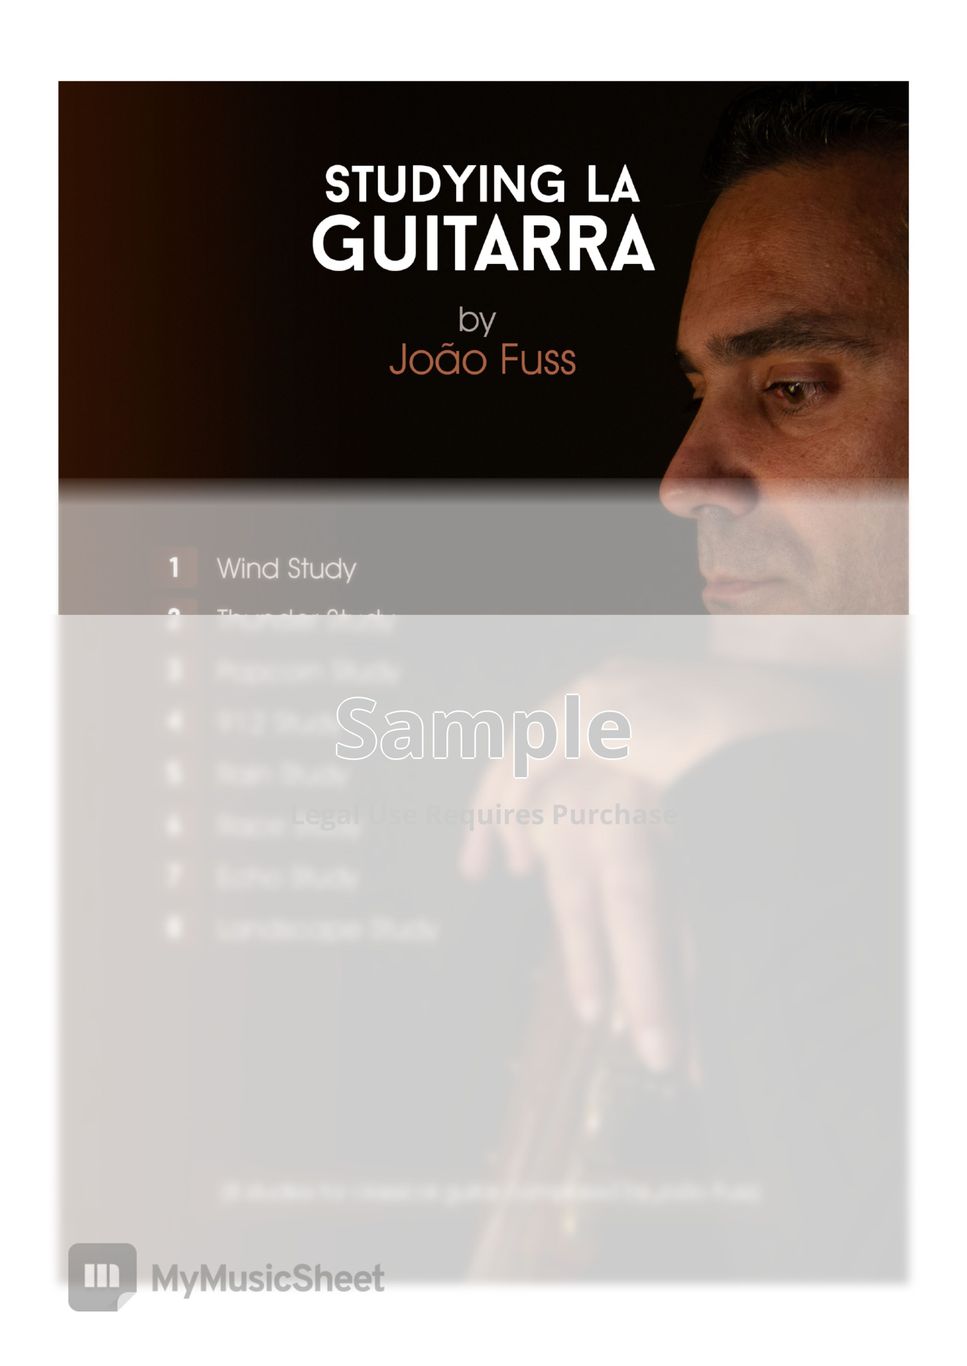 João Fuss - Race Study